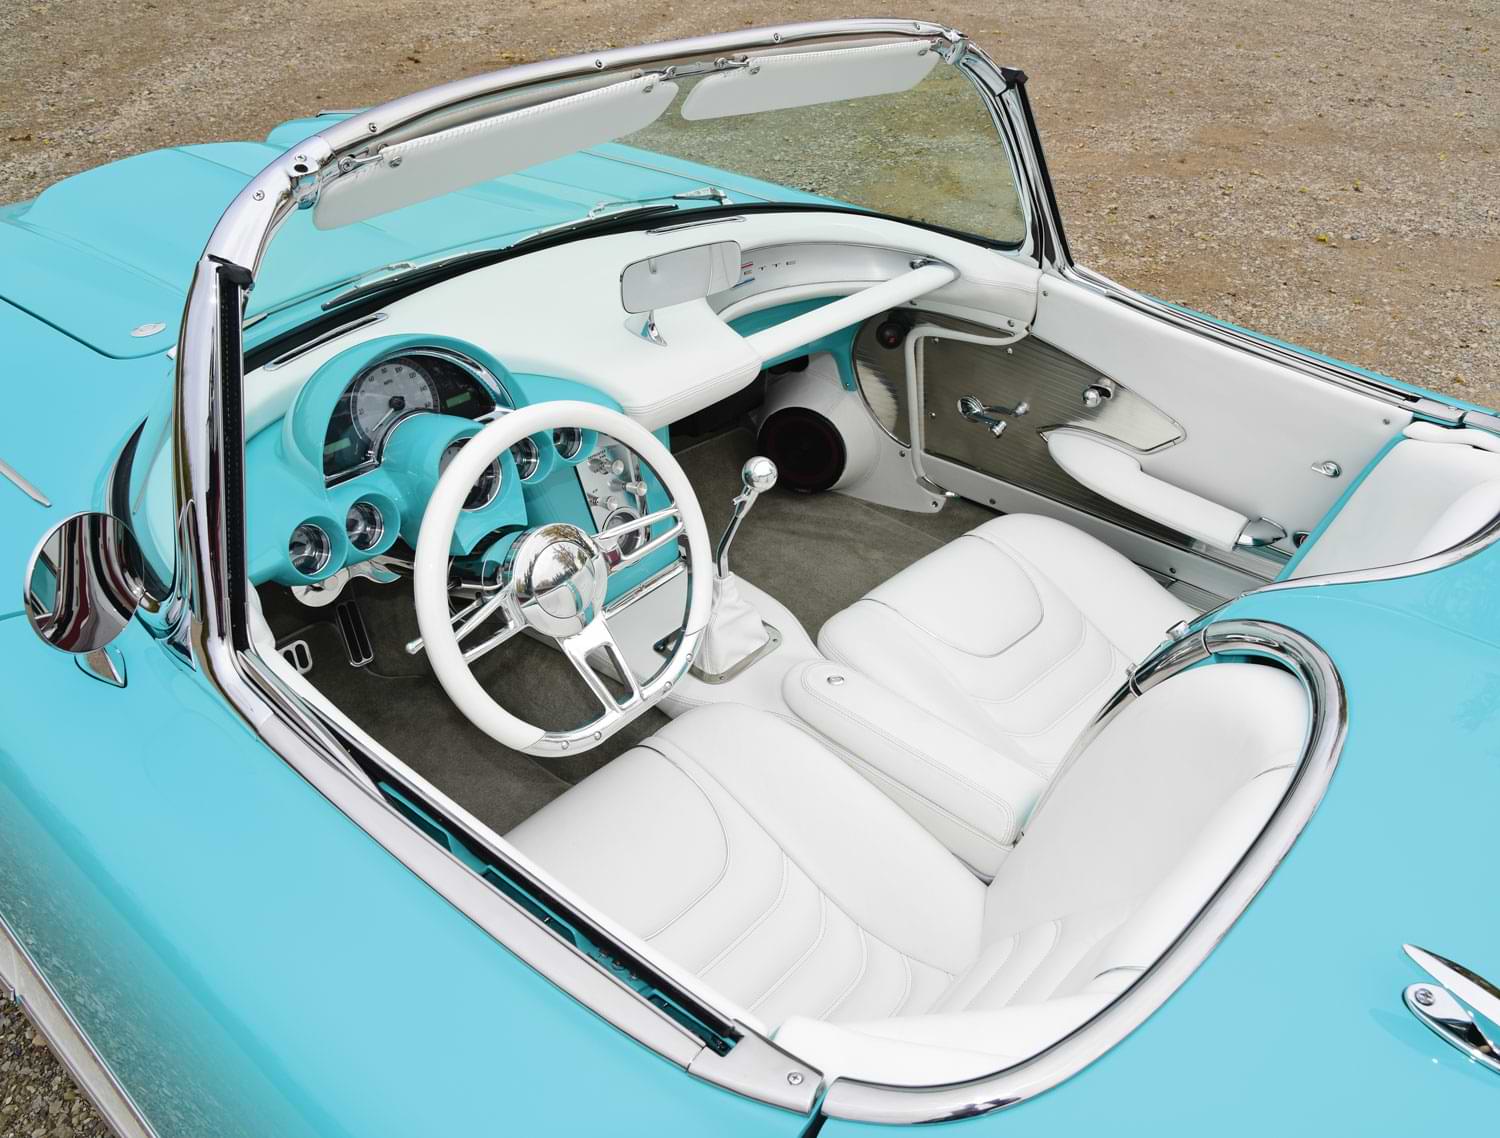 1961 Corvette top view